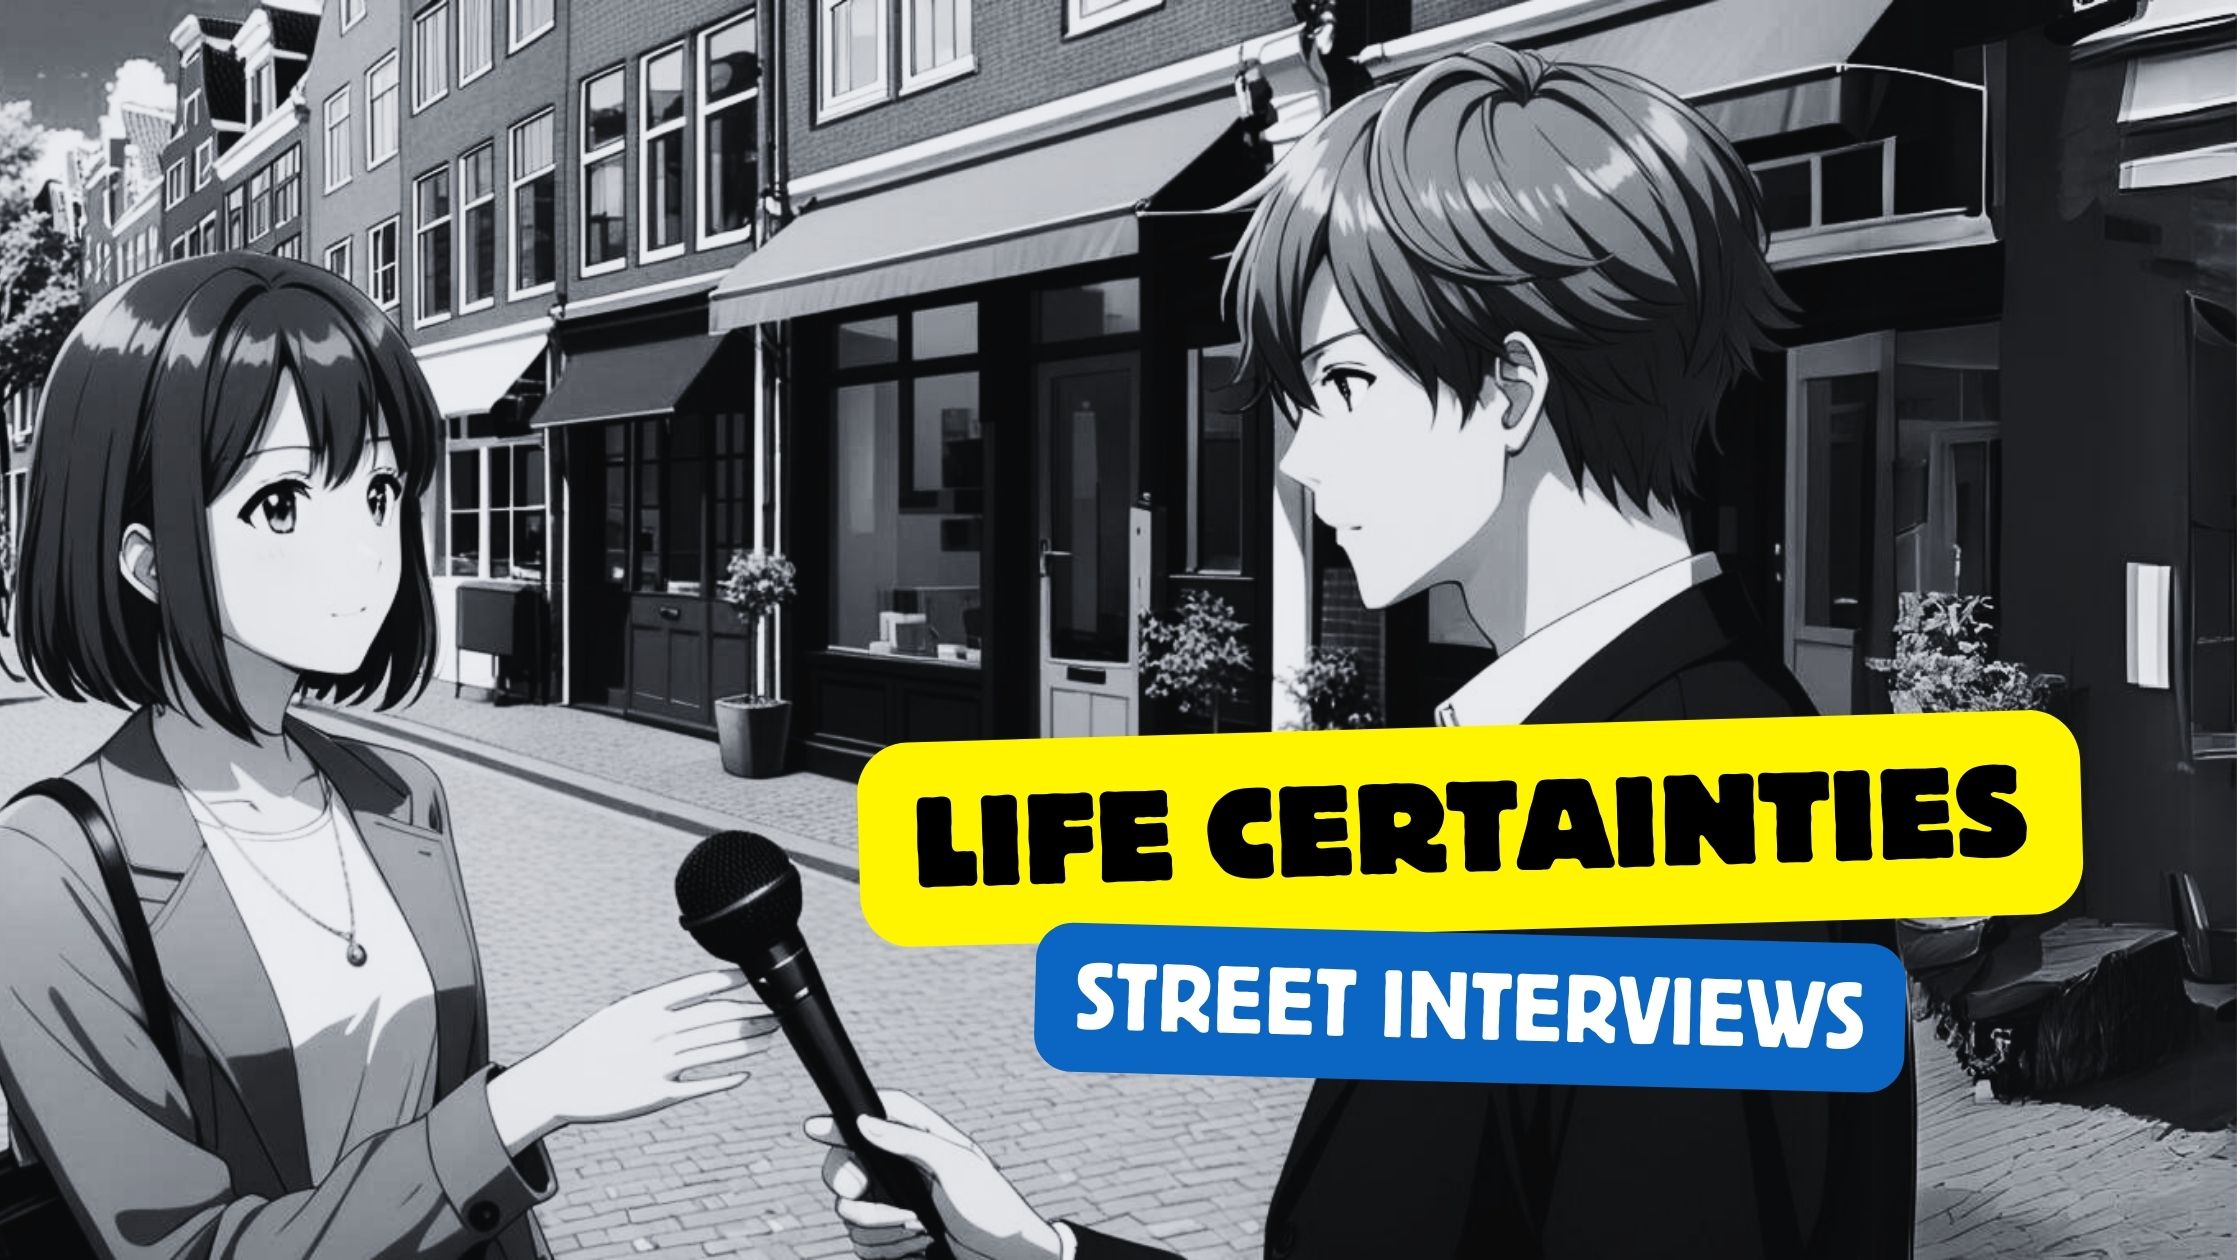 life certainties street interviews